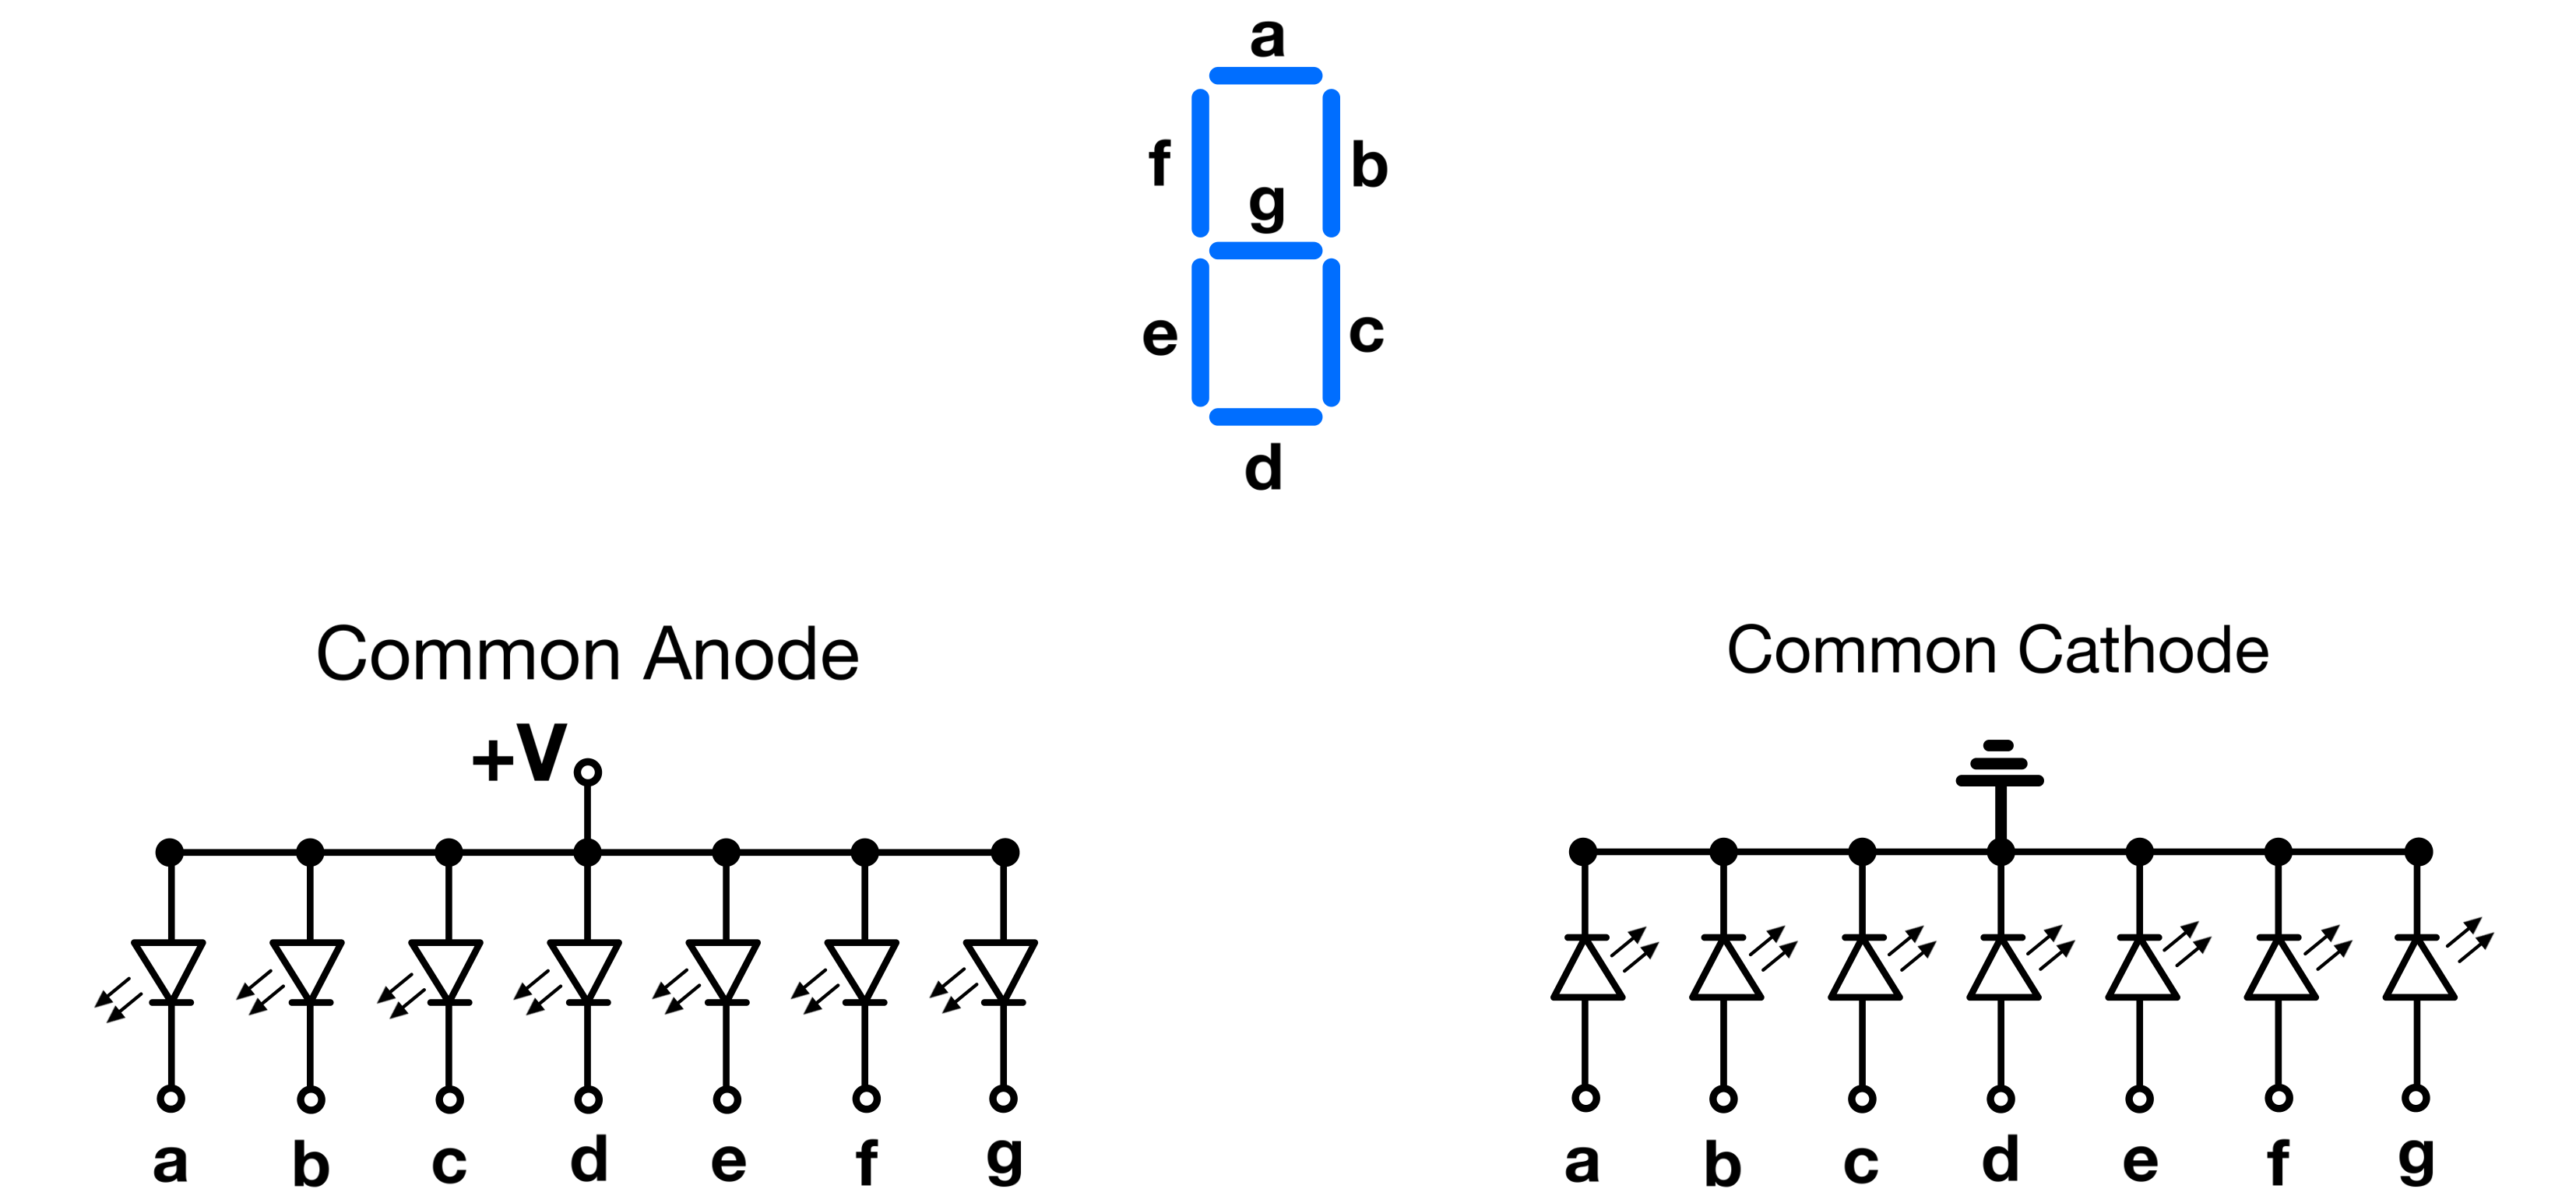 Figure 1: Common Anode vs Common Cathode 7 Segment LED